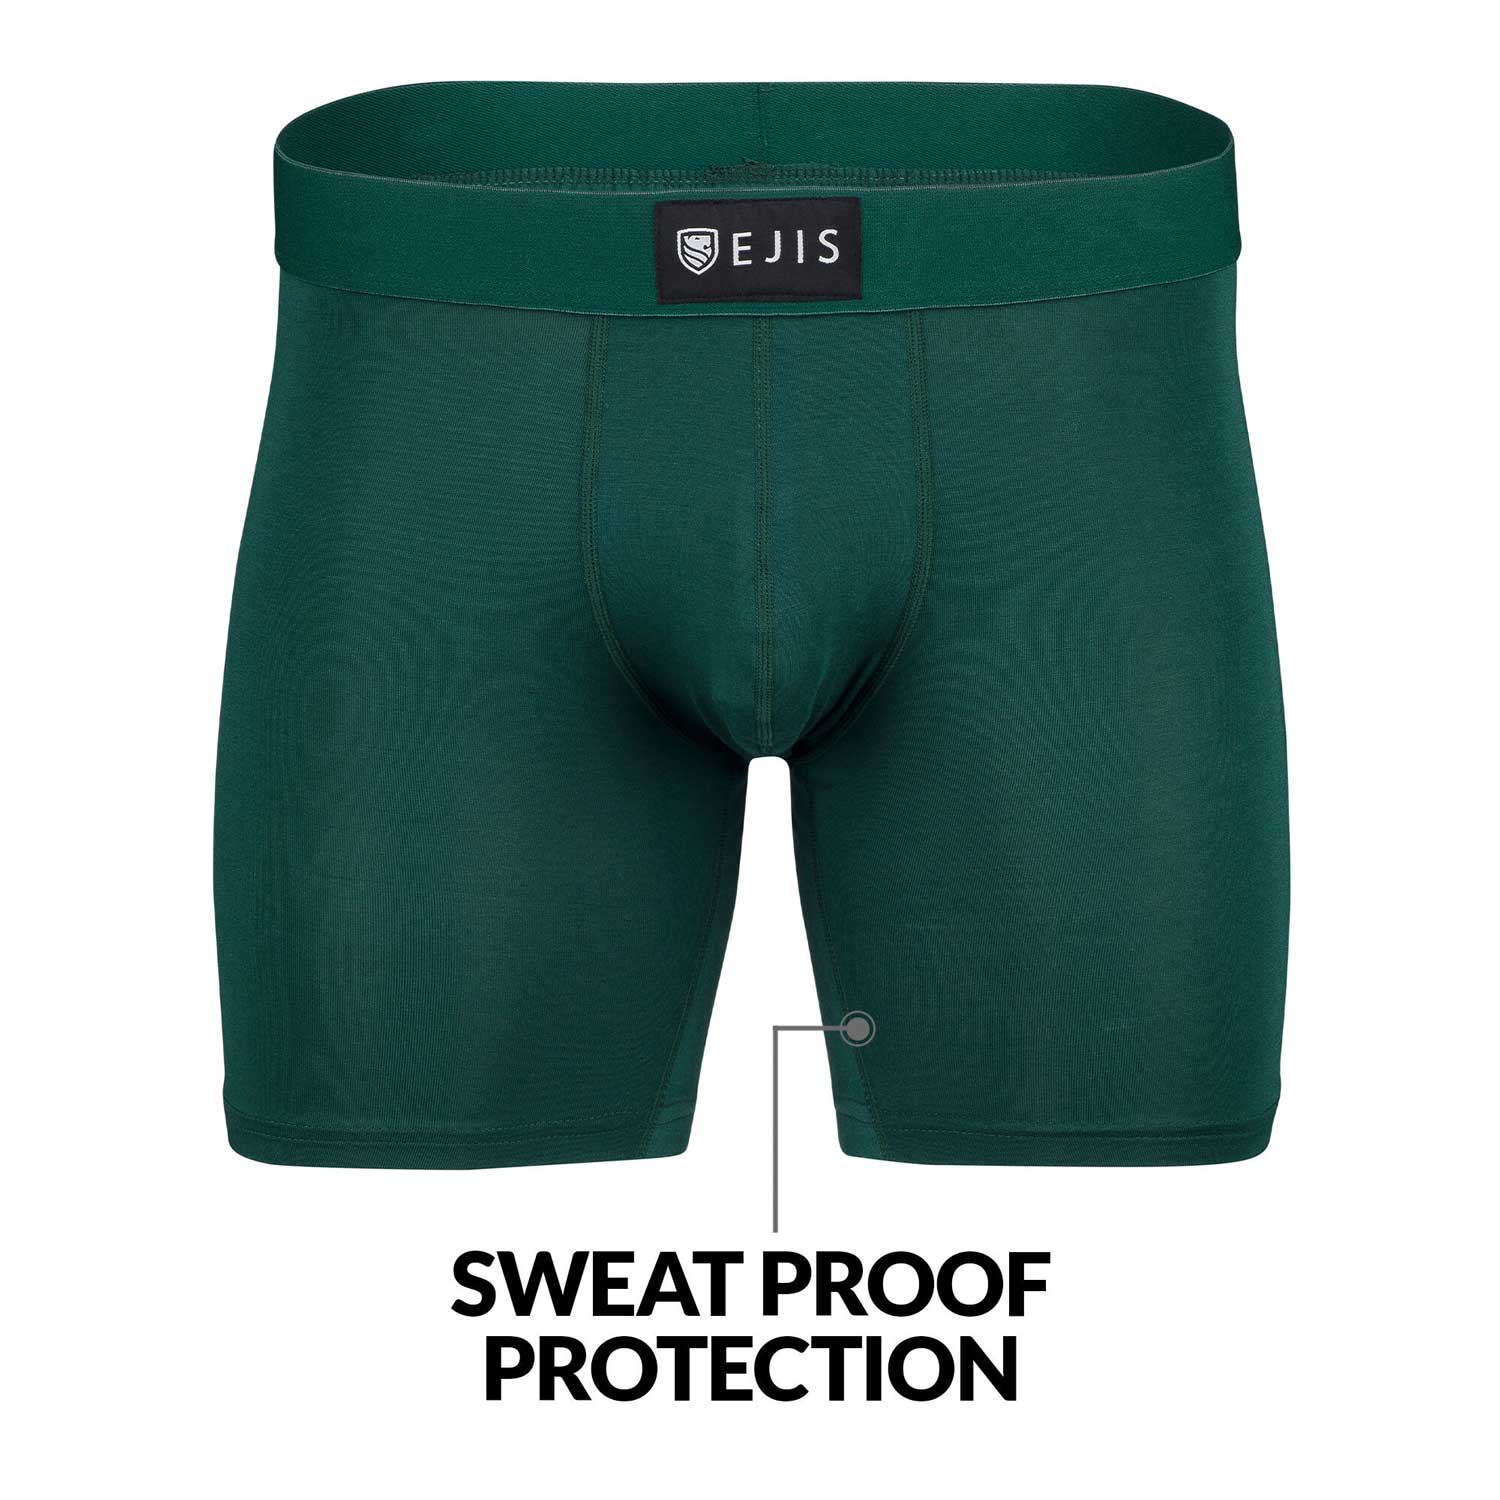 Ejis Premium Men's Boxer Briefs w/Comfort Pouch, Anti-Odor Silver